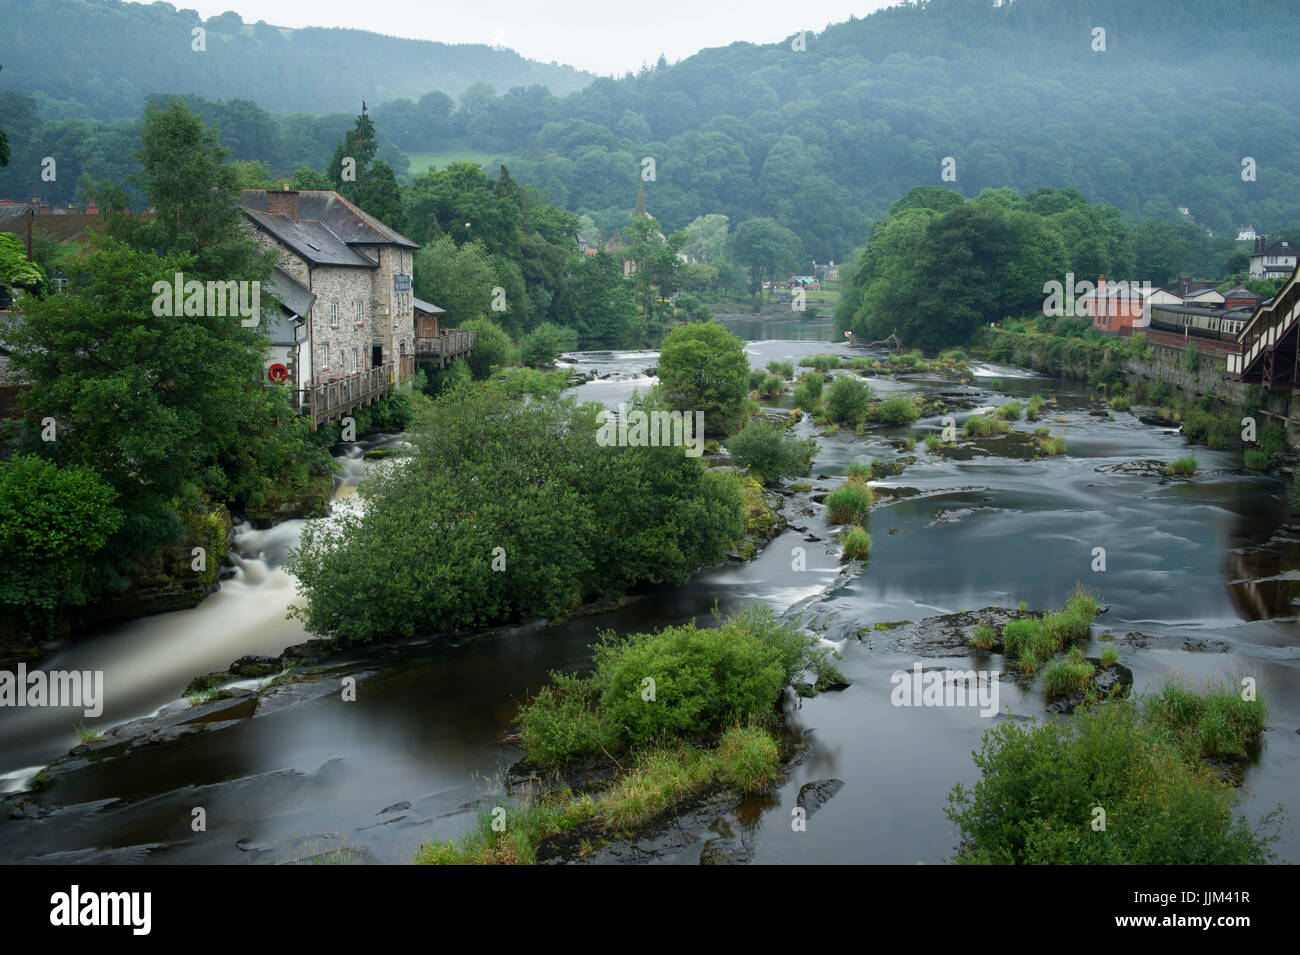 River Dee flowing through town of Llangollen. Wales, UK Stock Photo